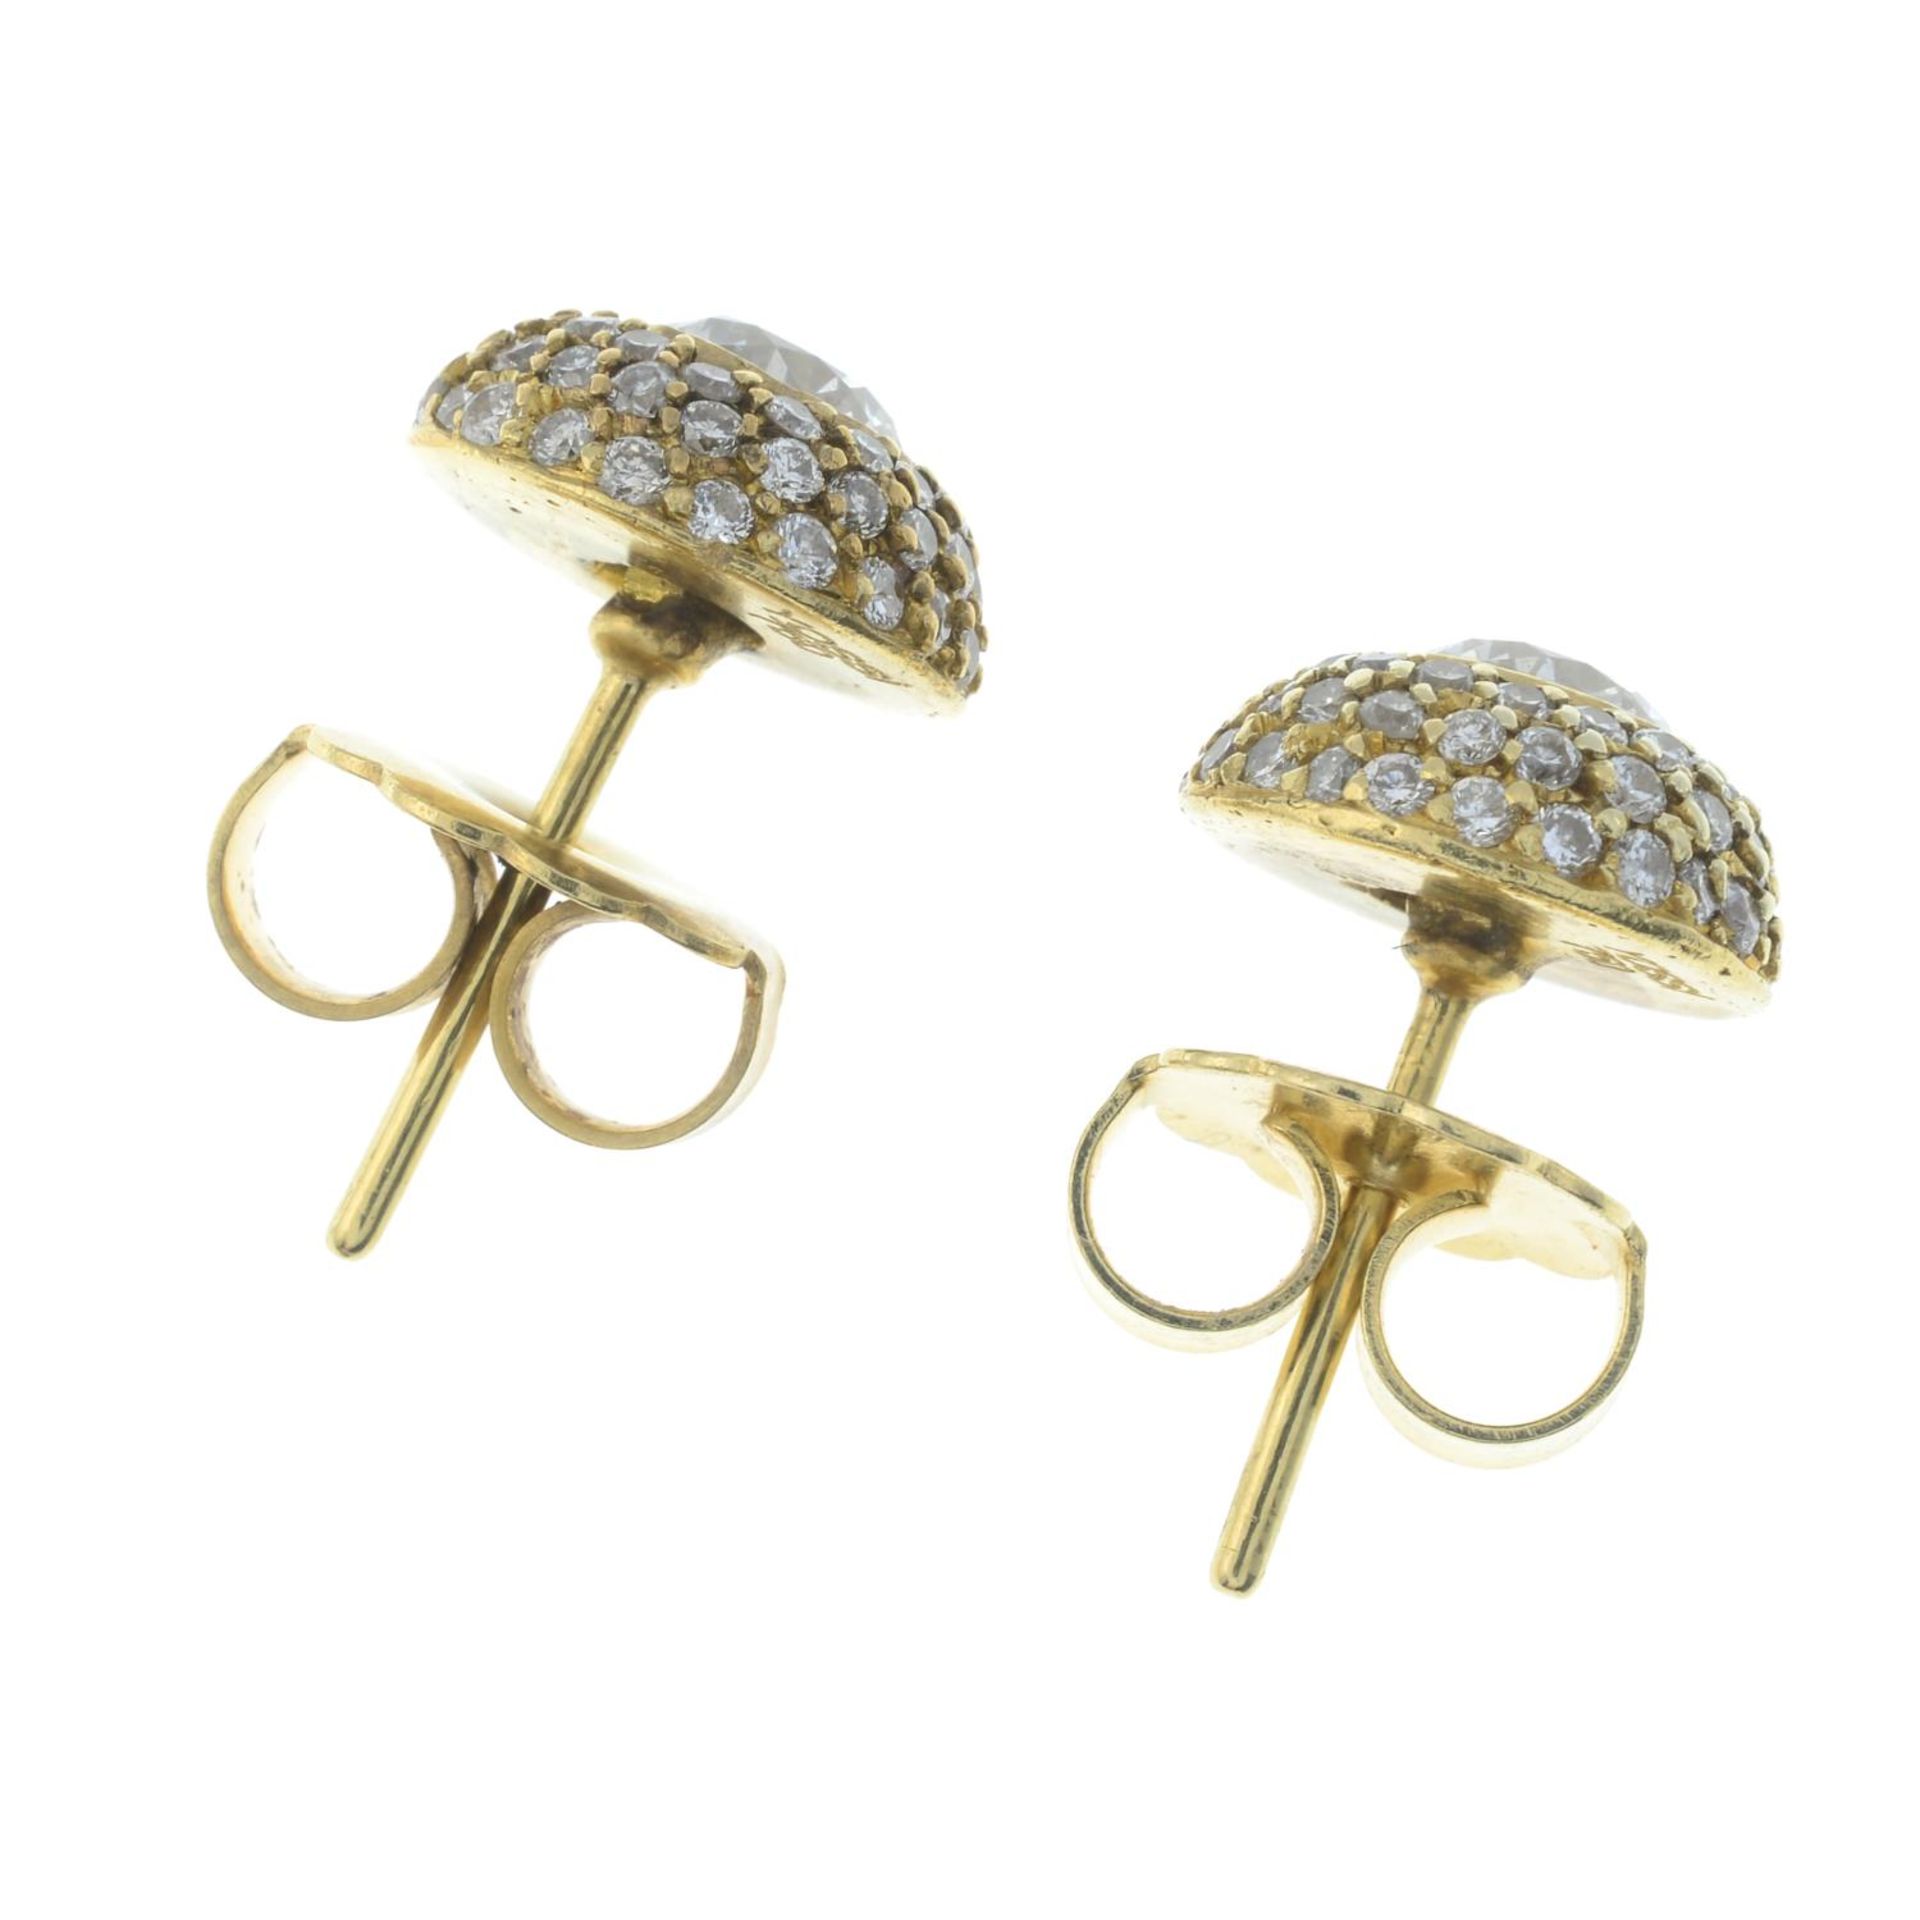 A pair of brilliant-cut diamond stud earrings, - Image 5 of 5